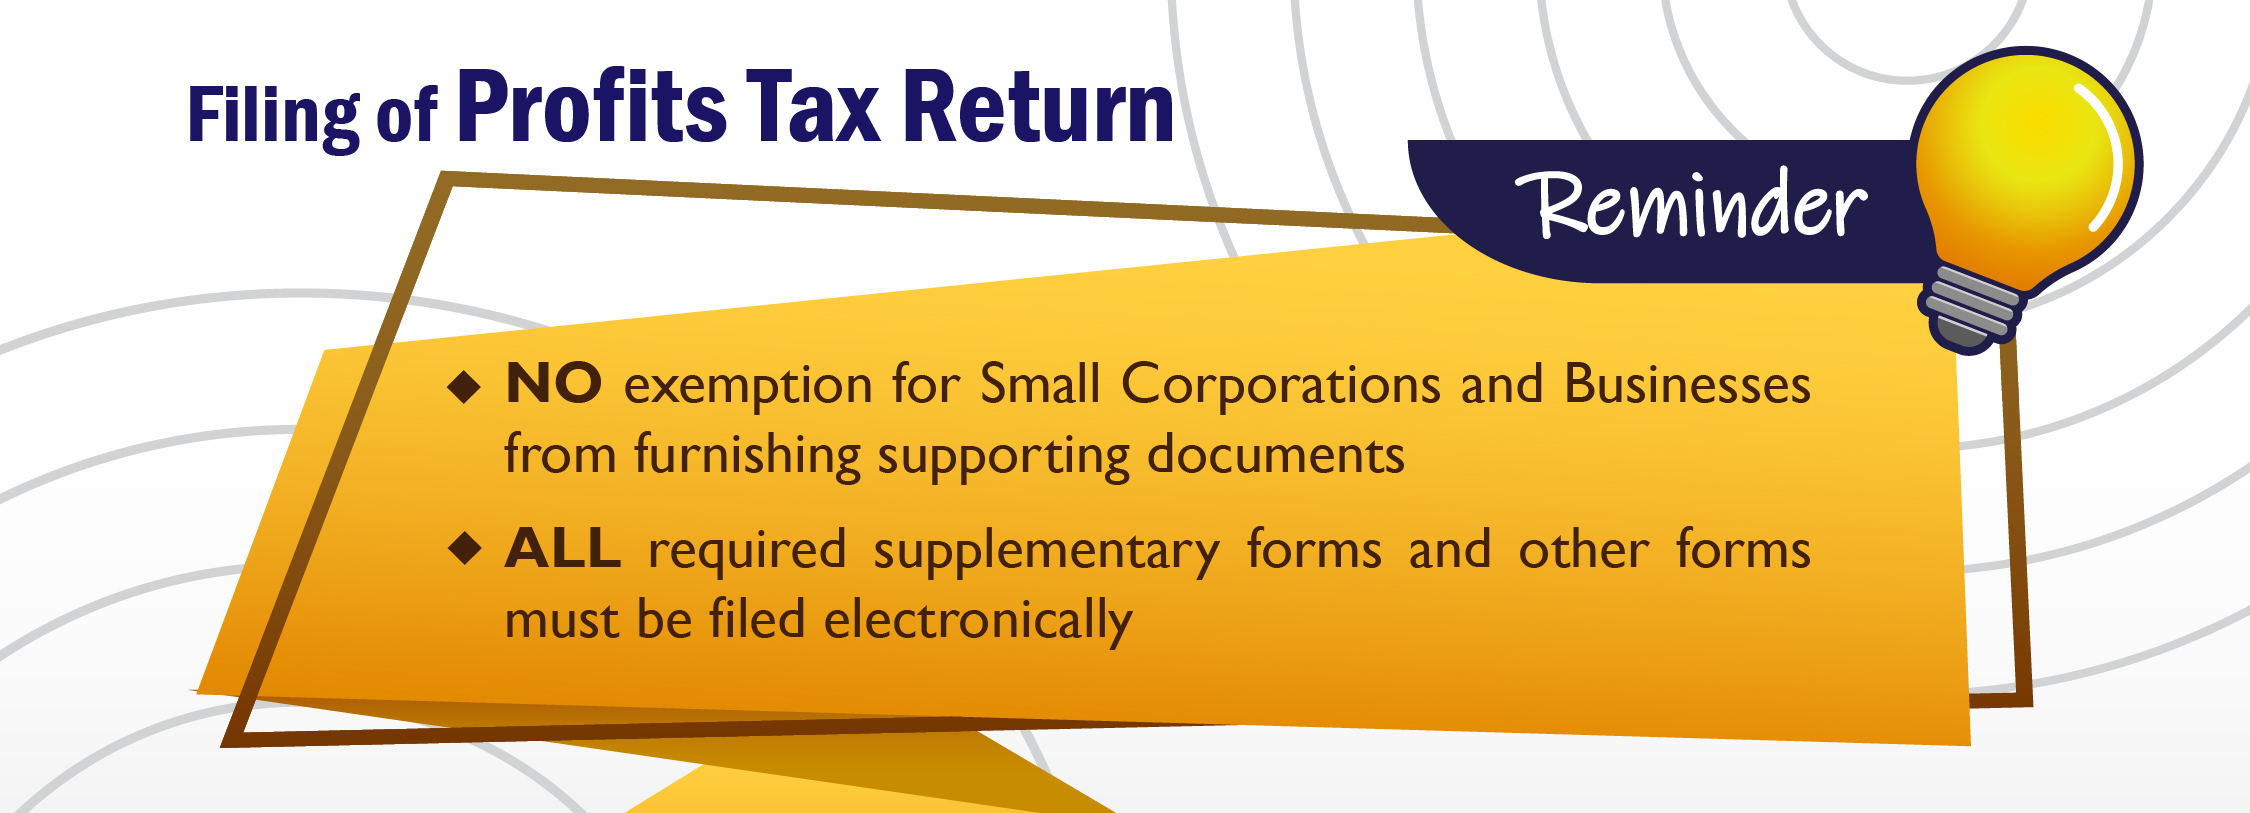 Warm Reminder on Profits Tax Return Filing Requirements